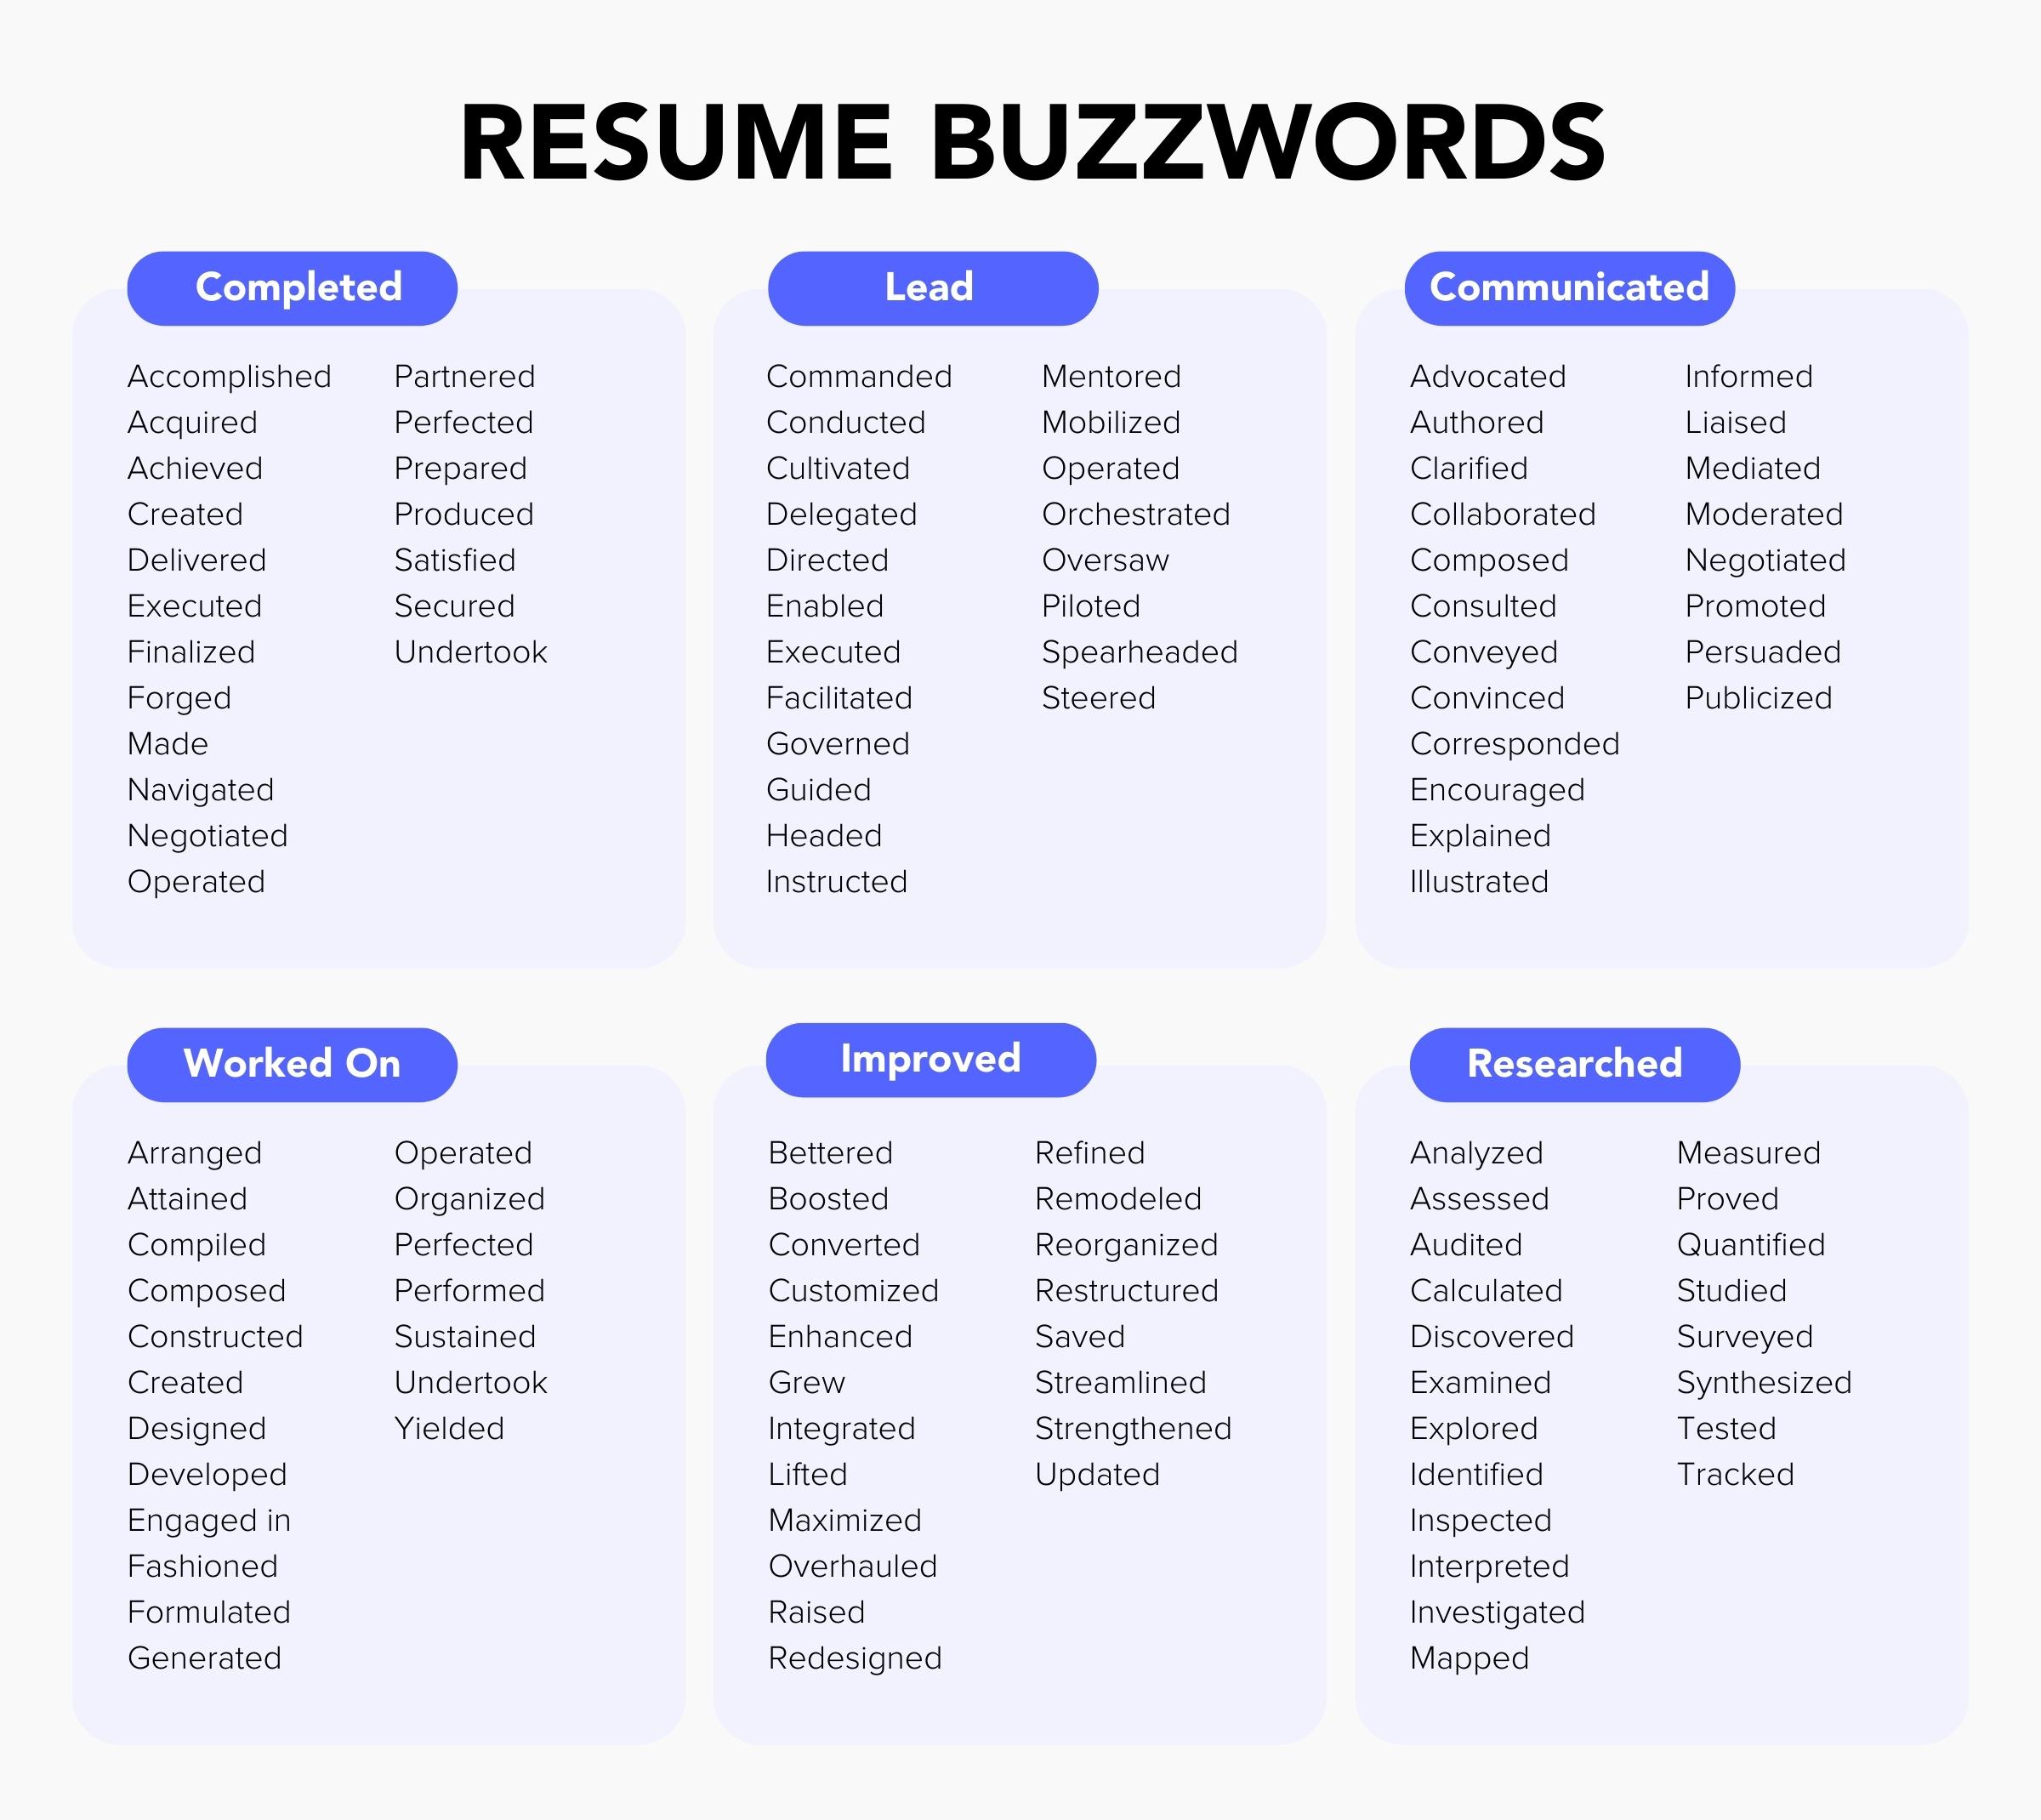 social work resume buzz words